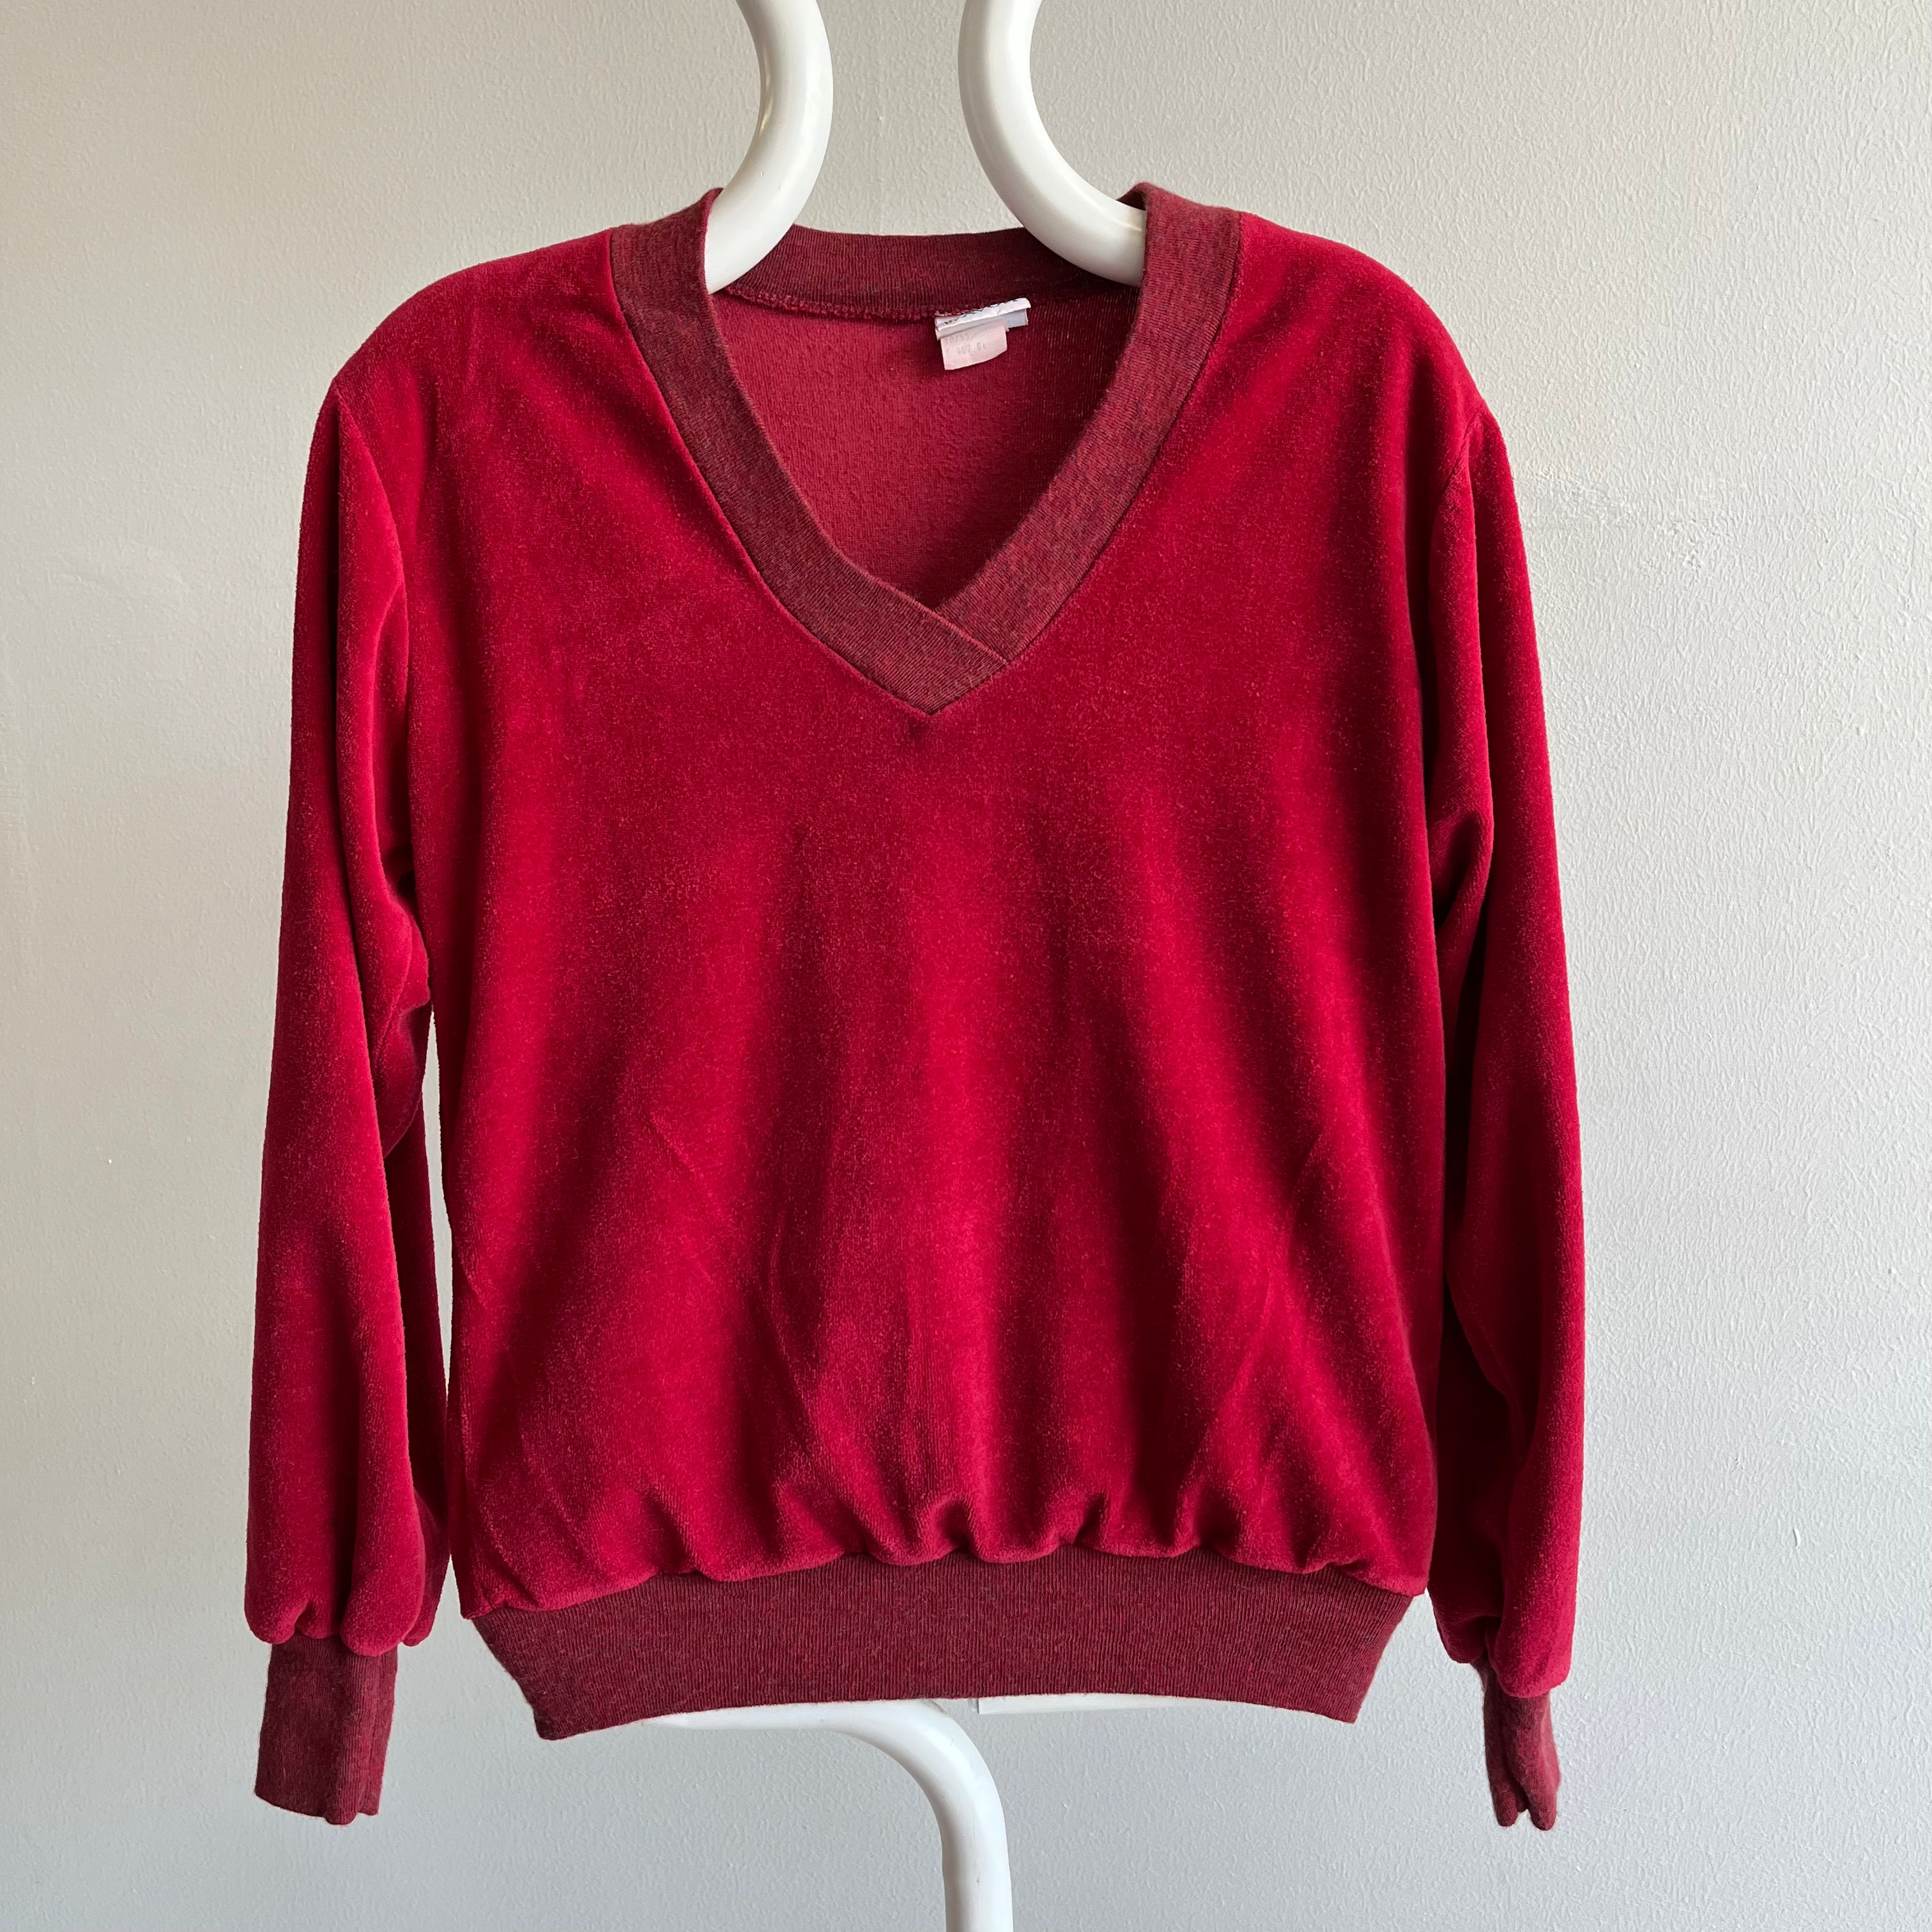 1980s V-Neck Velour Style Sweatshirt by Avon - Yes, that's right - Avon